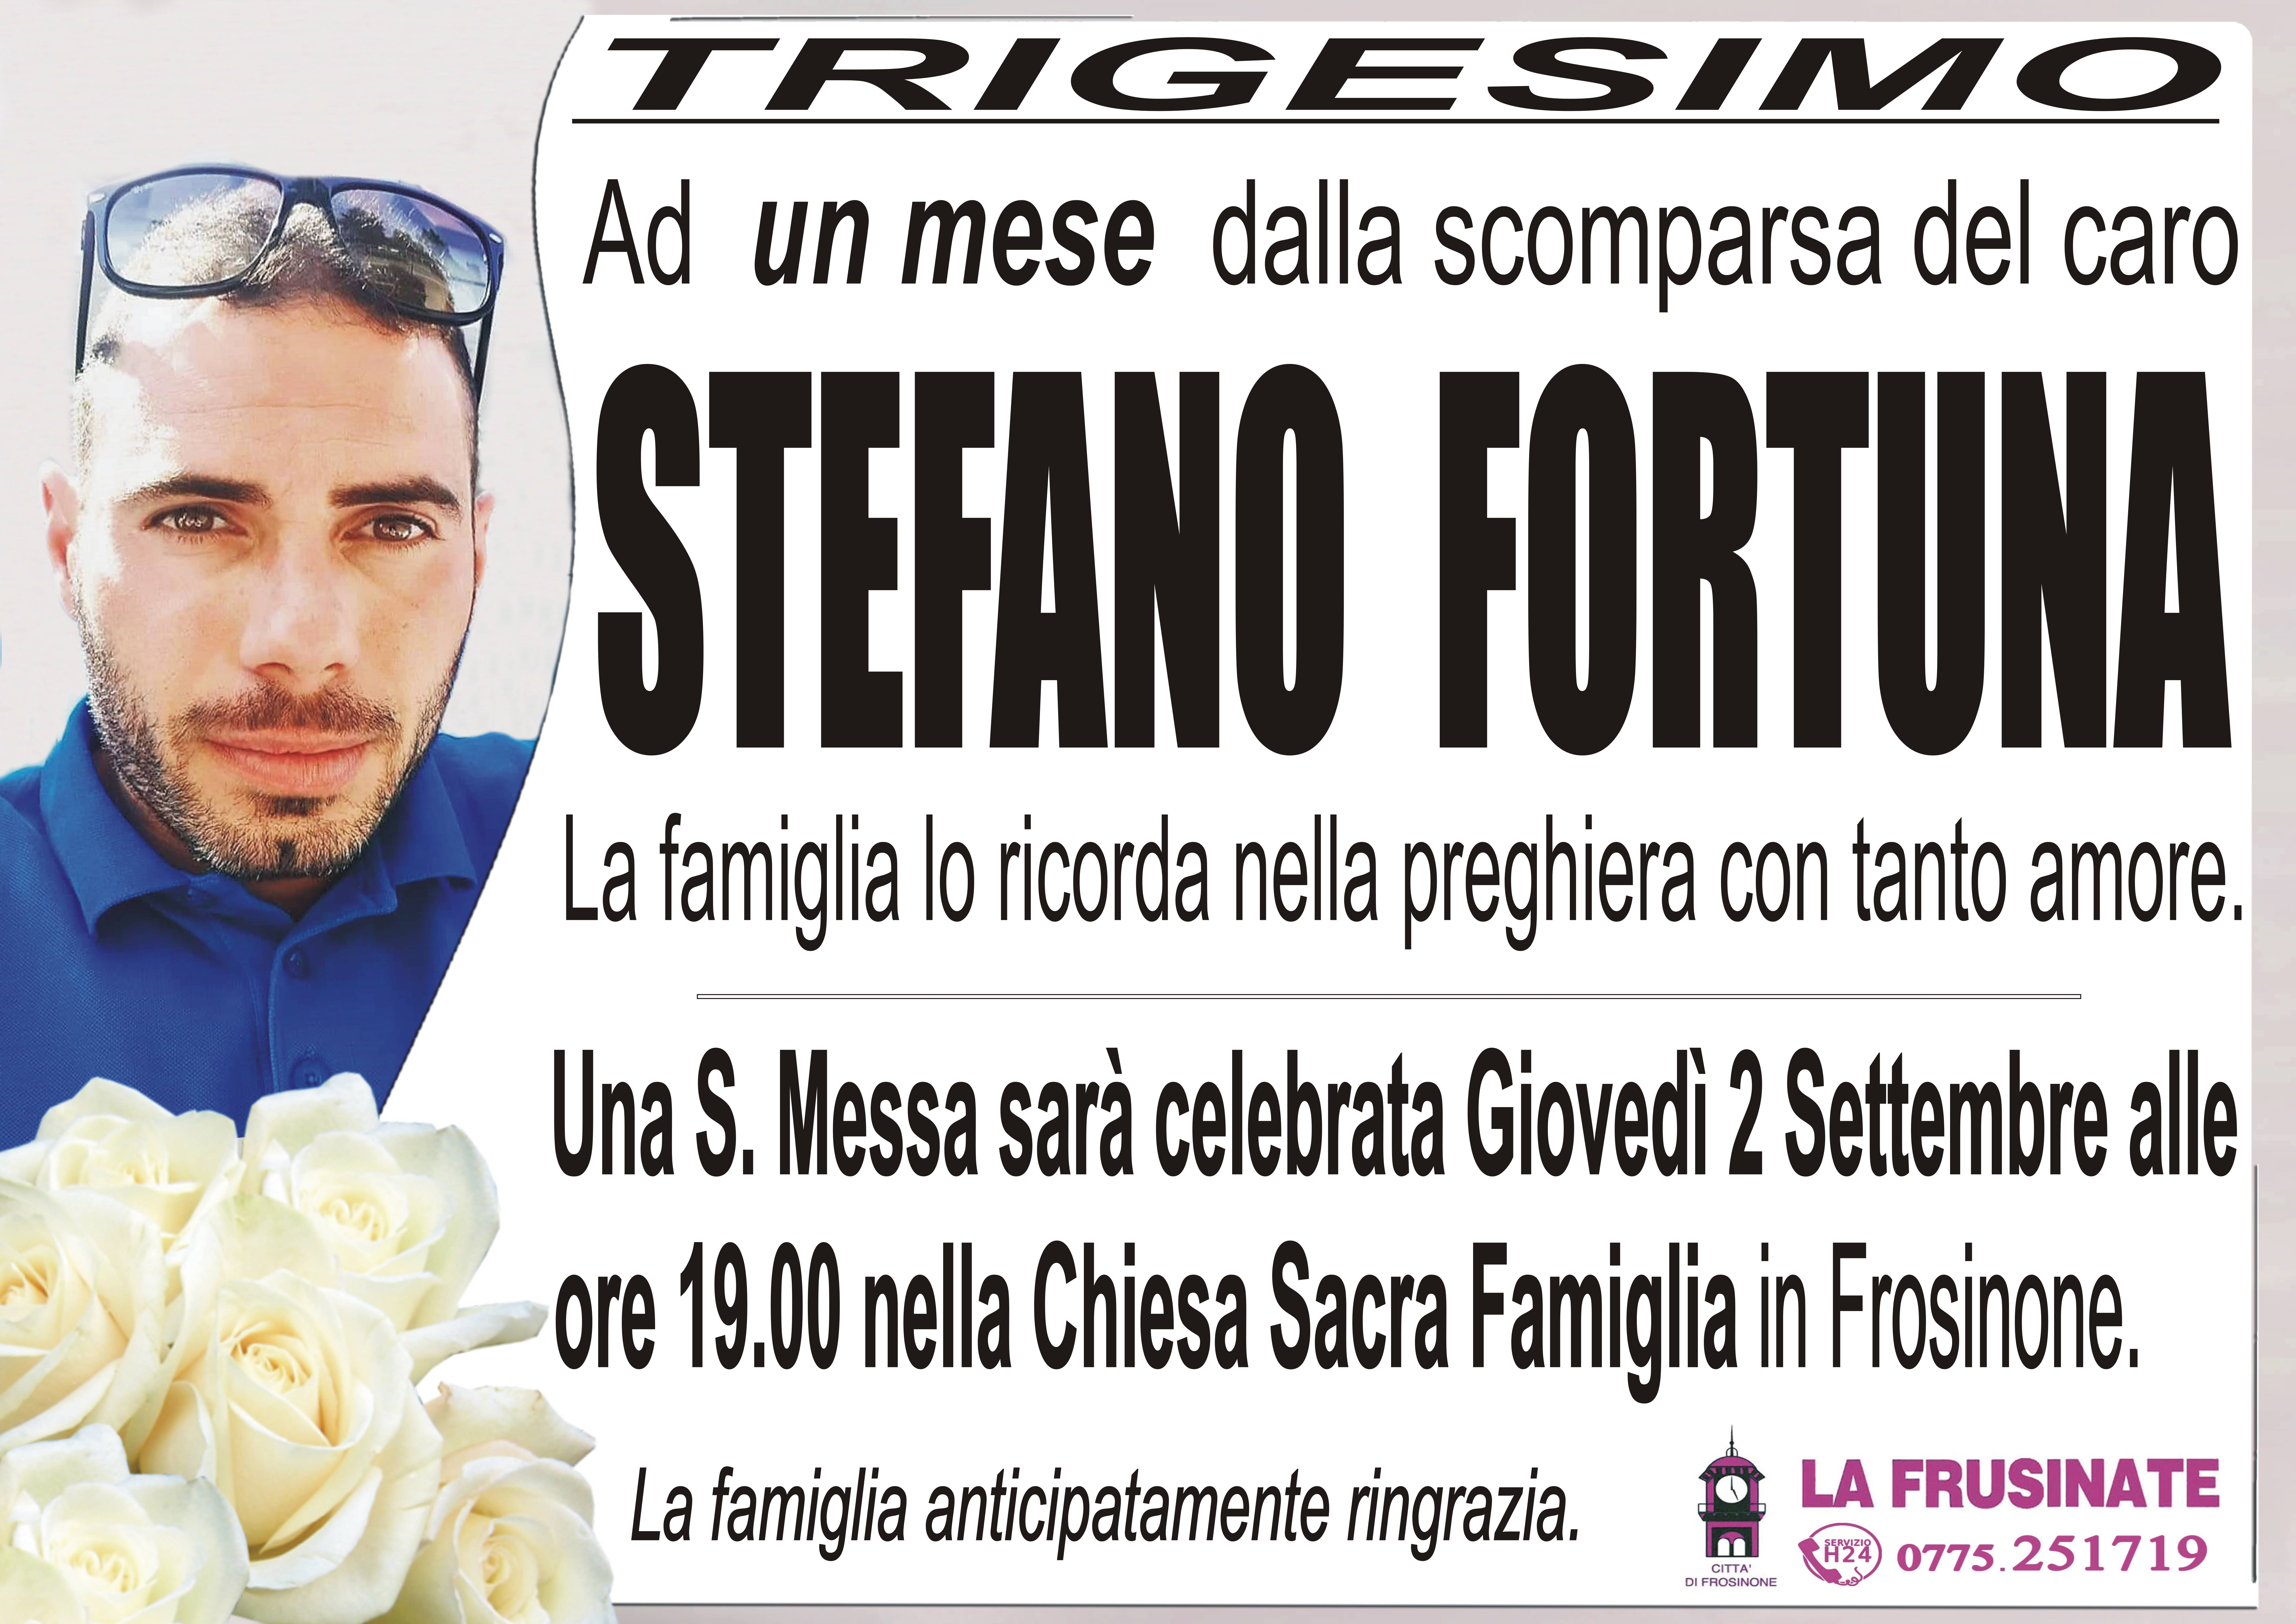 Stefano Fortuna